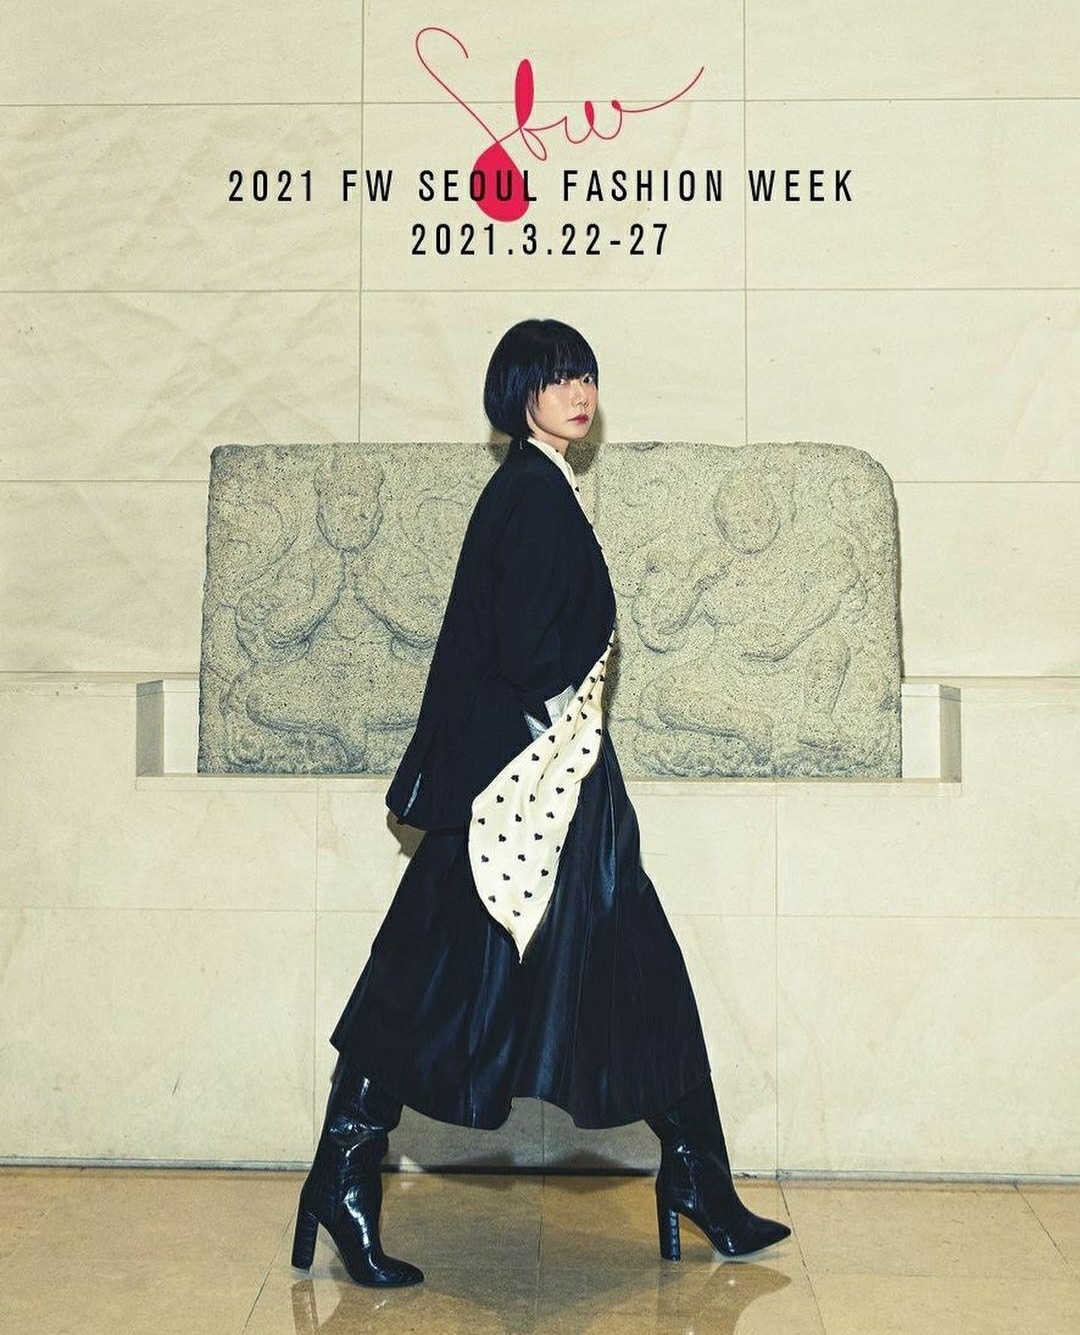 Seoul Fashion Week runways to expand to Korea's landmarks, museums